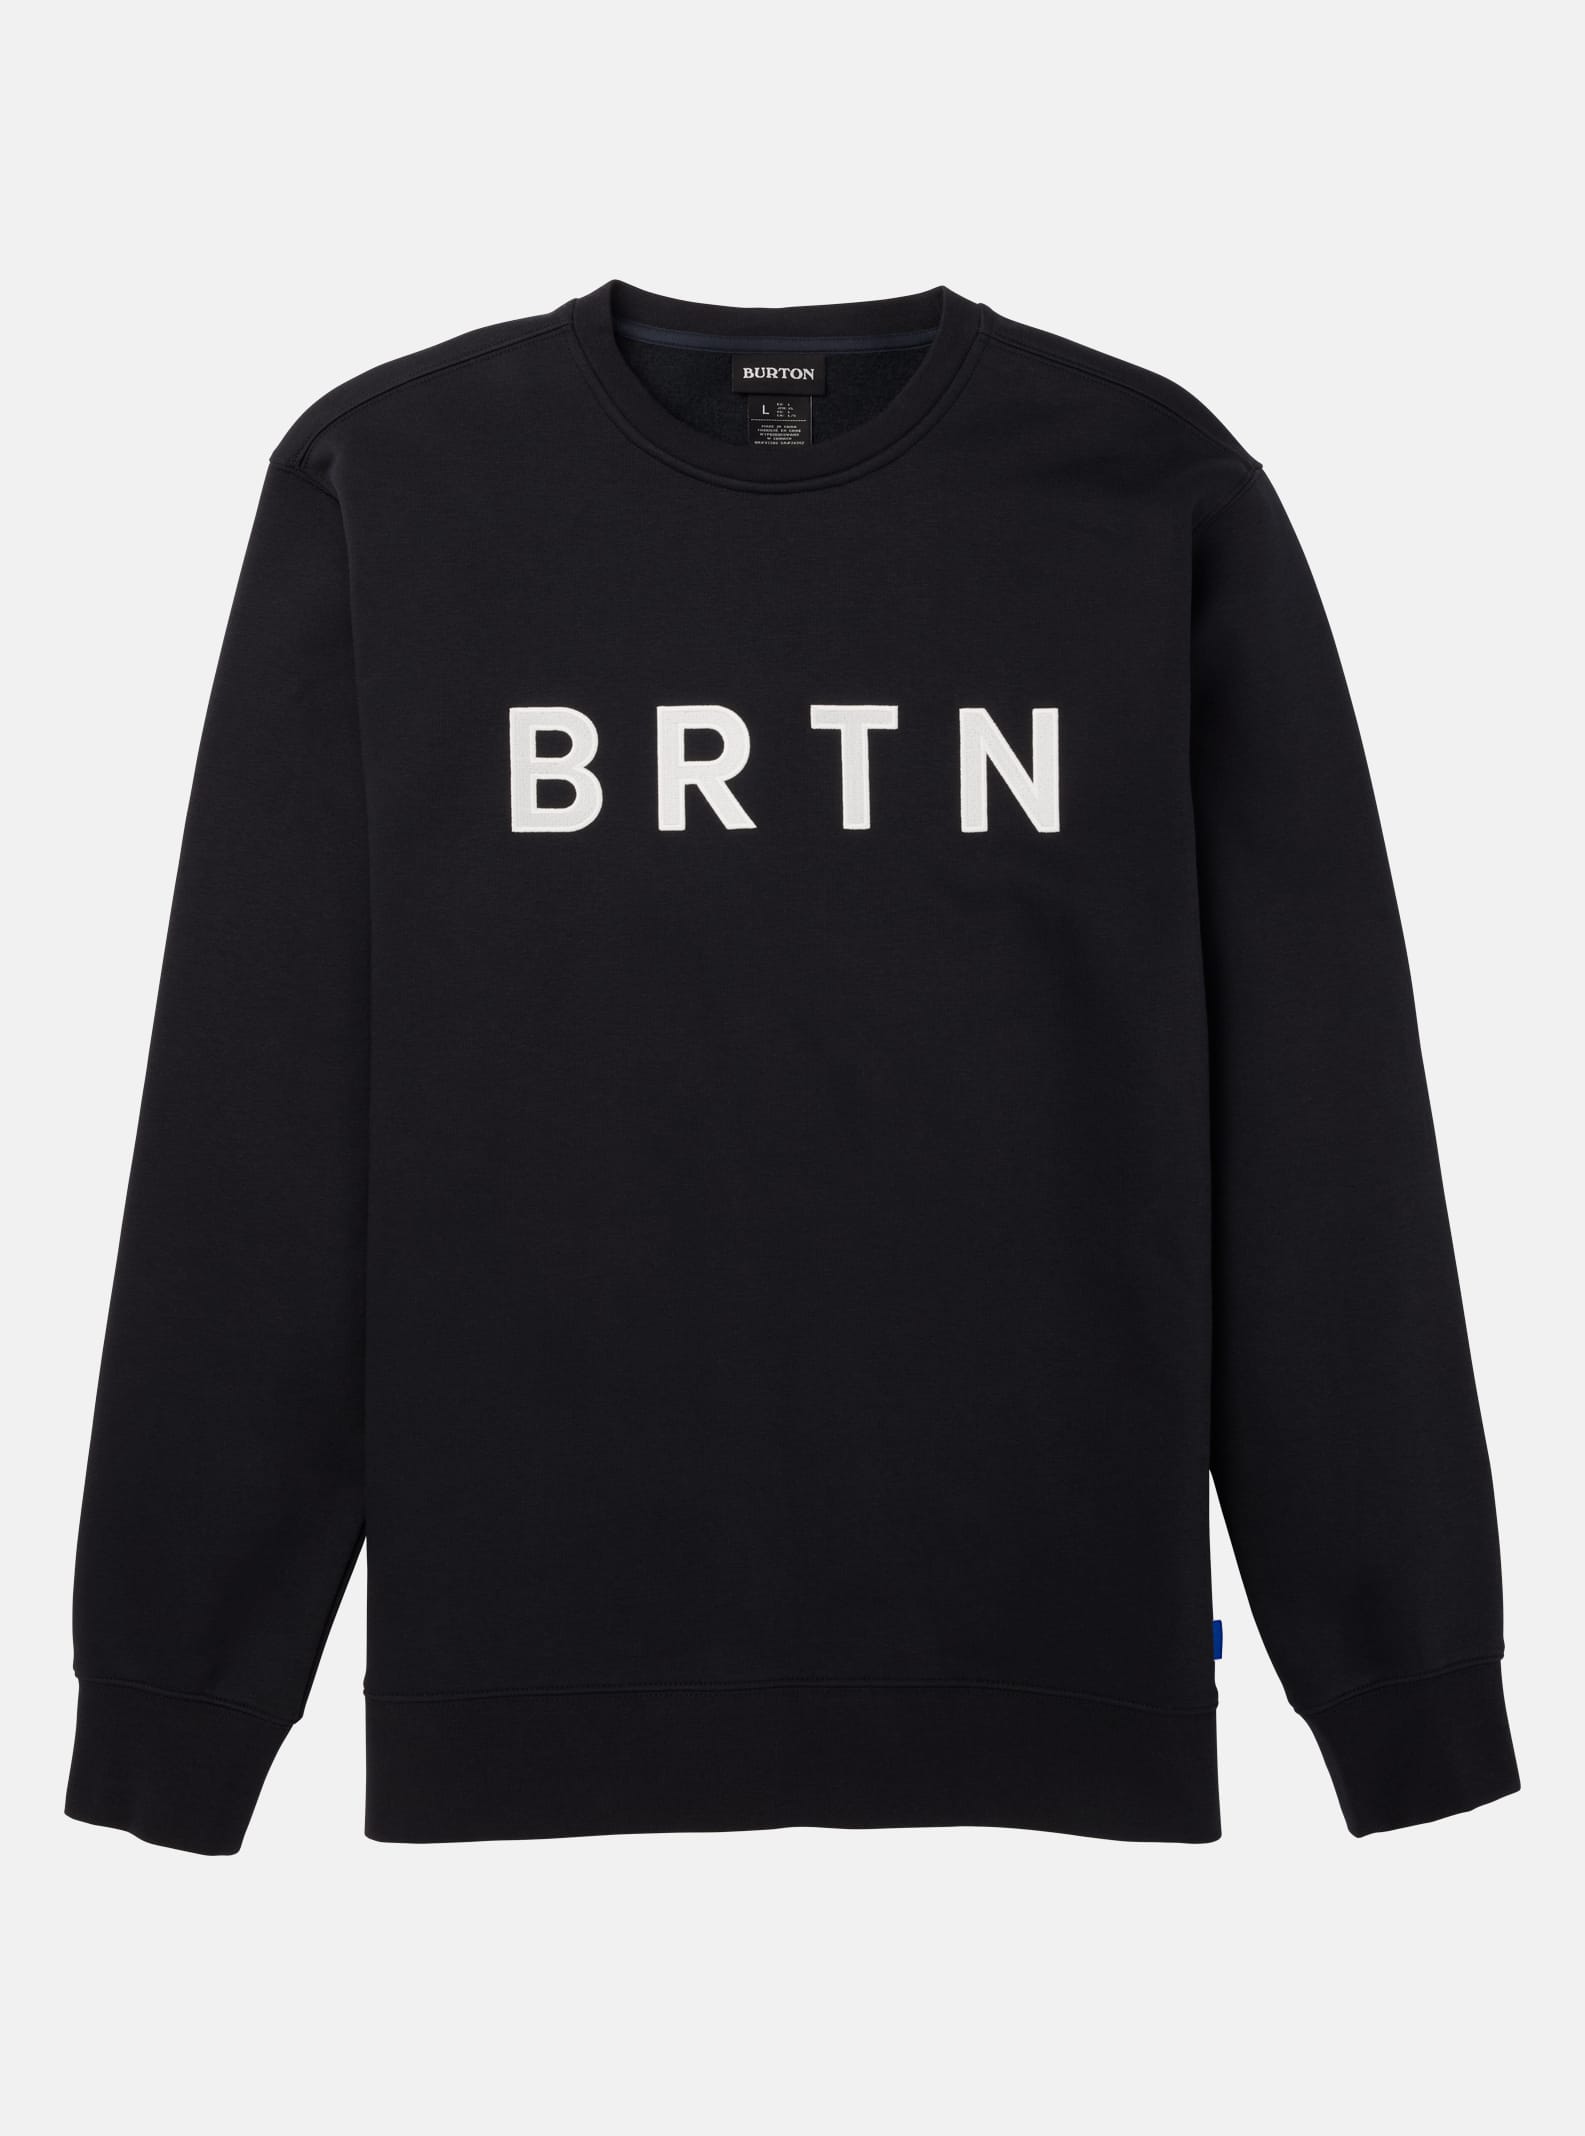 Burton Sweatshirt - BRTN Crewneck, True Black, XS